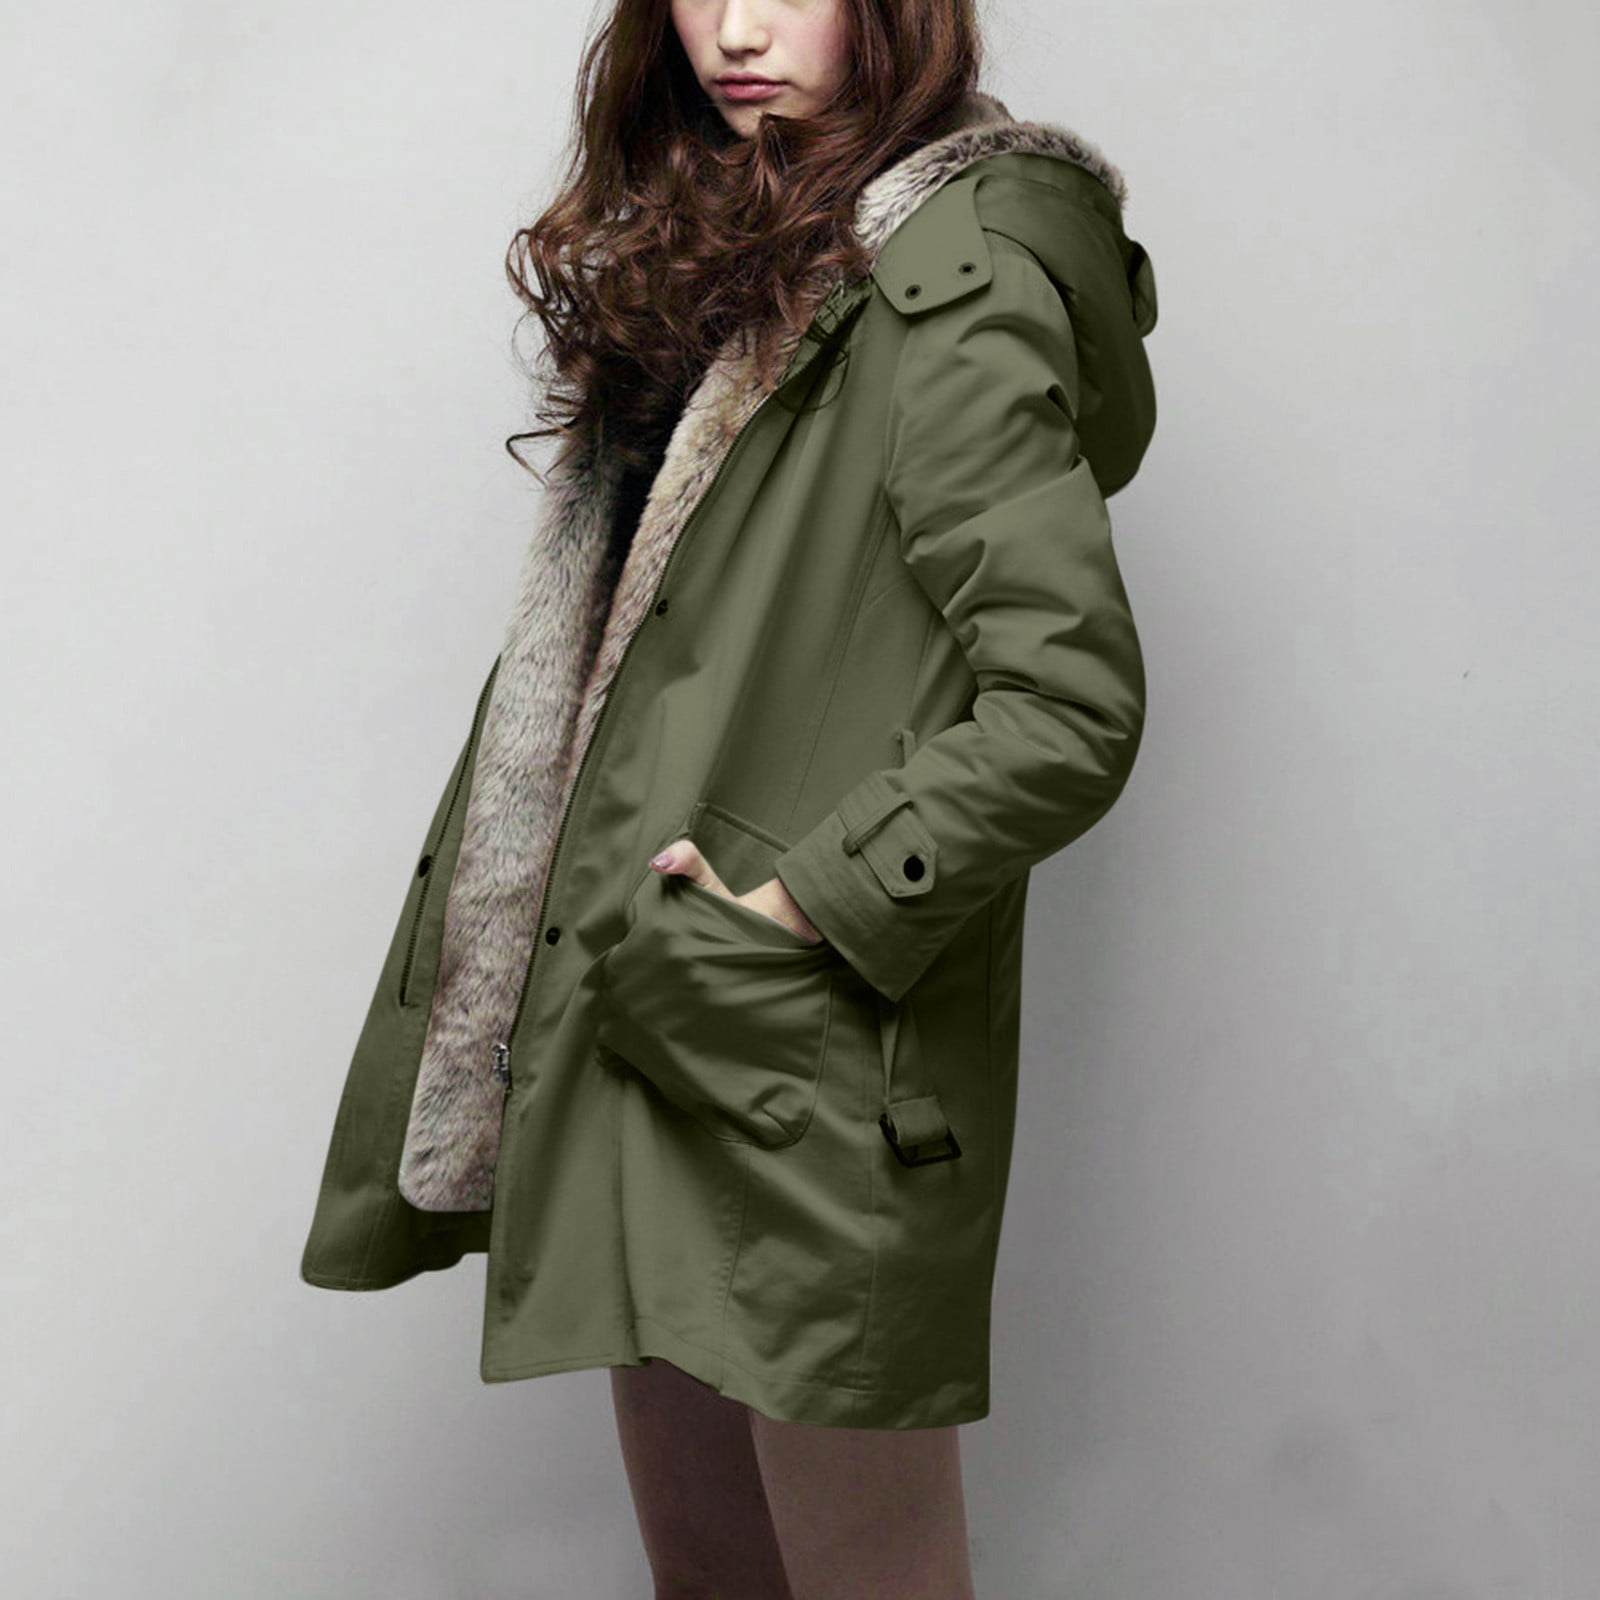 TIFENNY Winter Warm Womens Casual Coat Jacket Long Sleeve Button Plush Parka Outwear Thicken Overcoat 